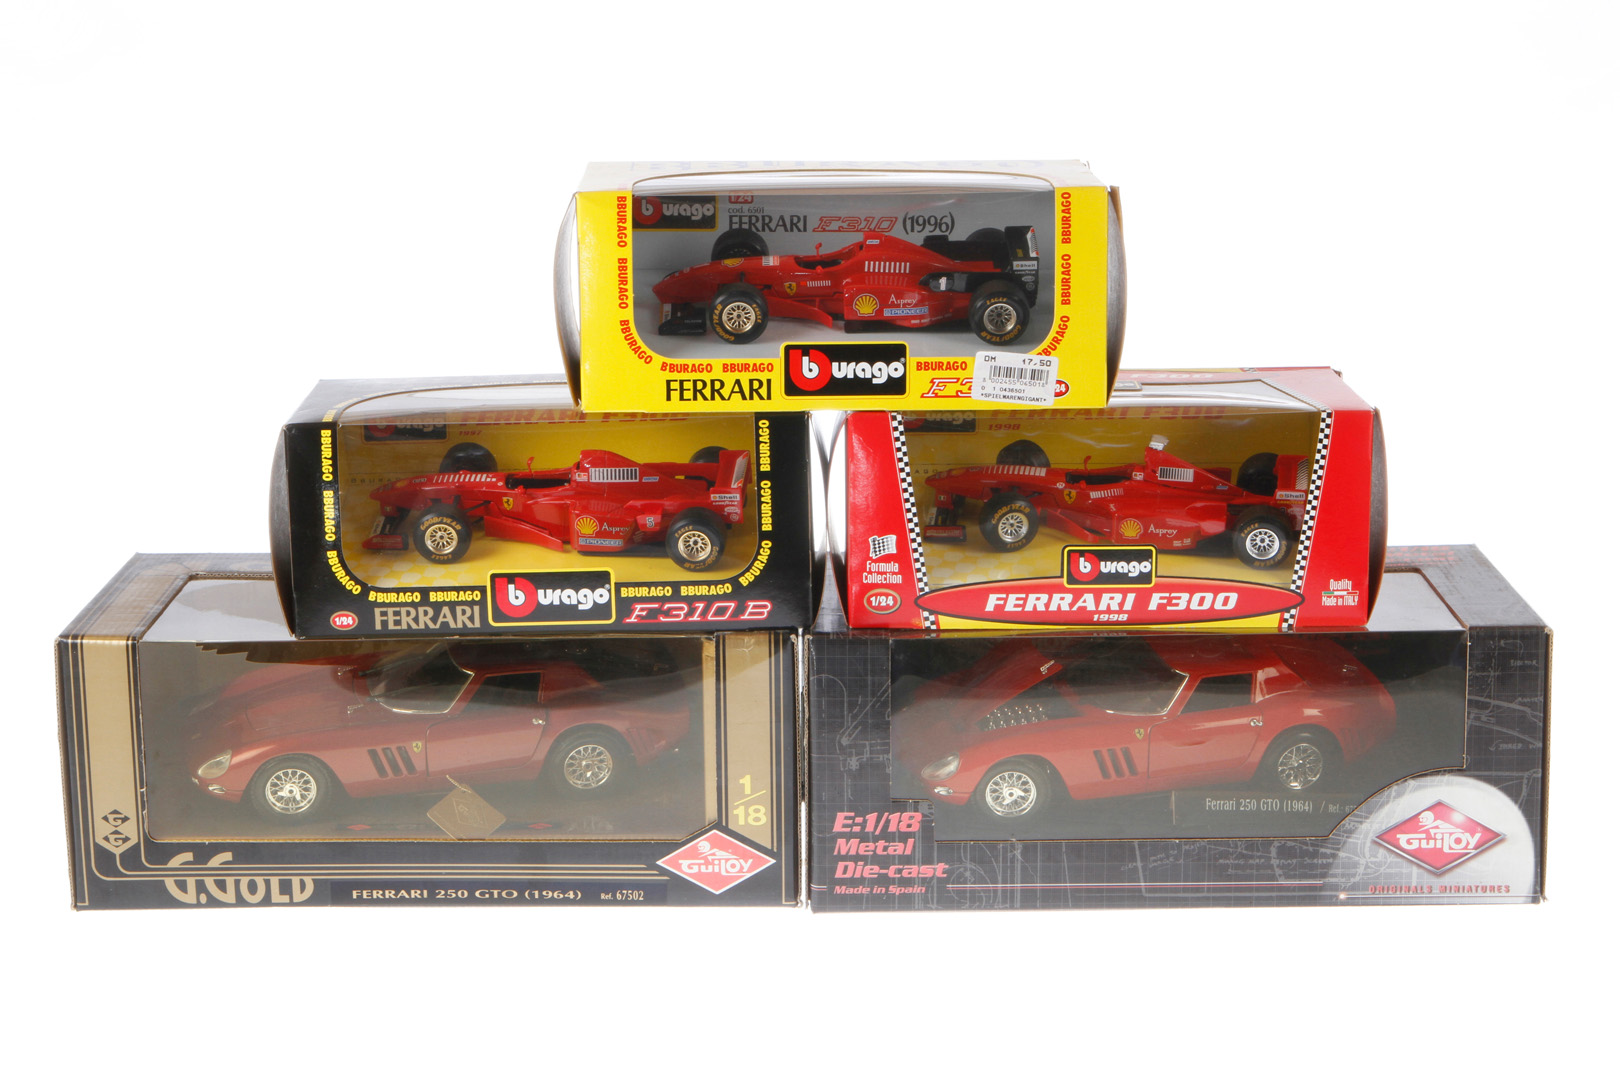 3 Bburago Ferrari F300/310, Maßstab 1:24 und 2 Guitoy Ferrari 250 GTO, Maßstab 1:18, leichte